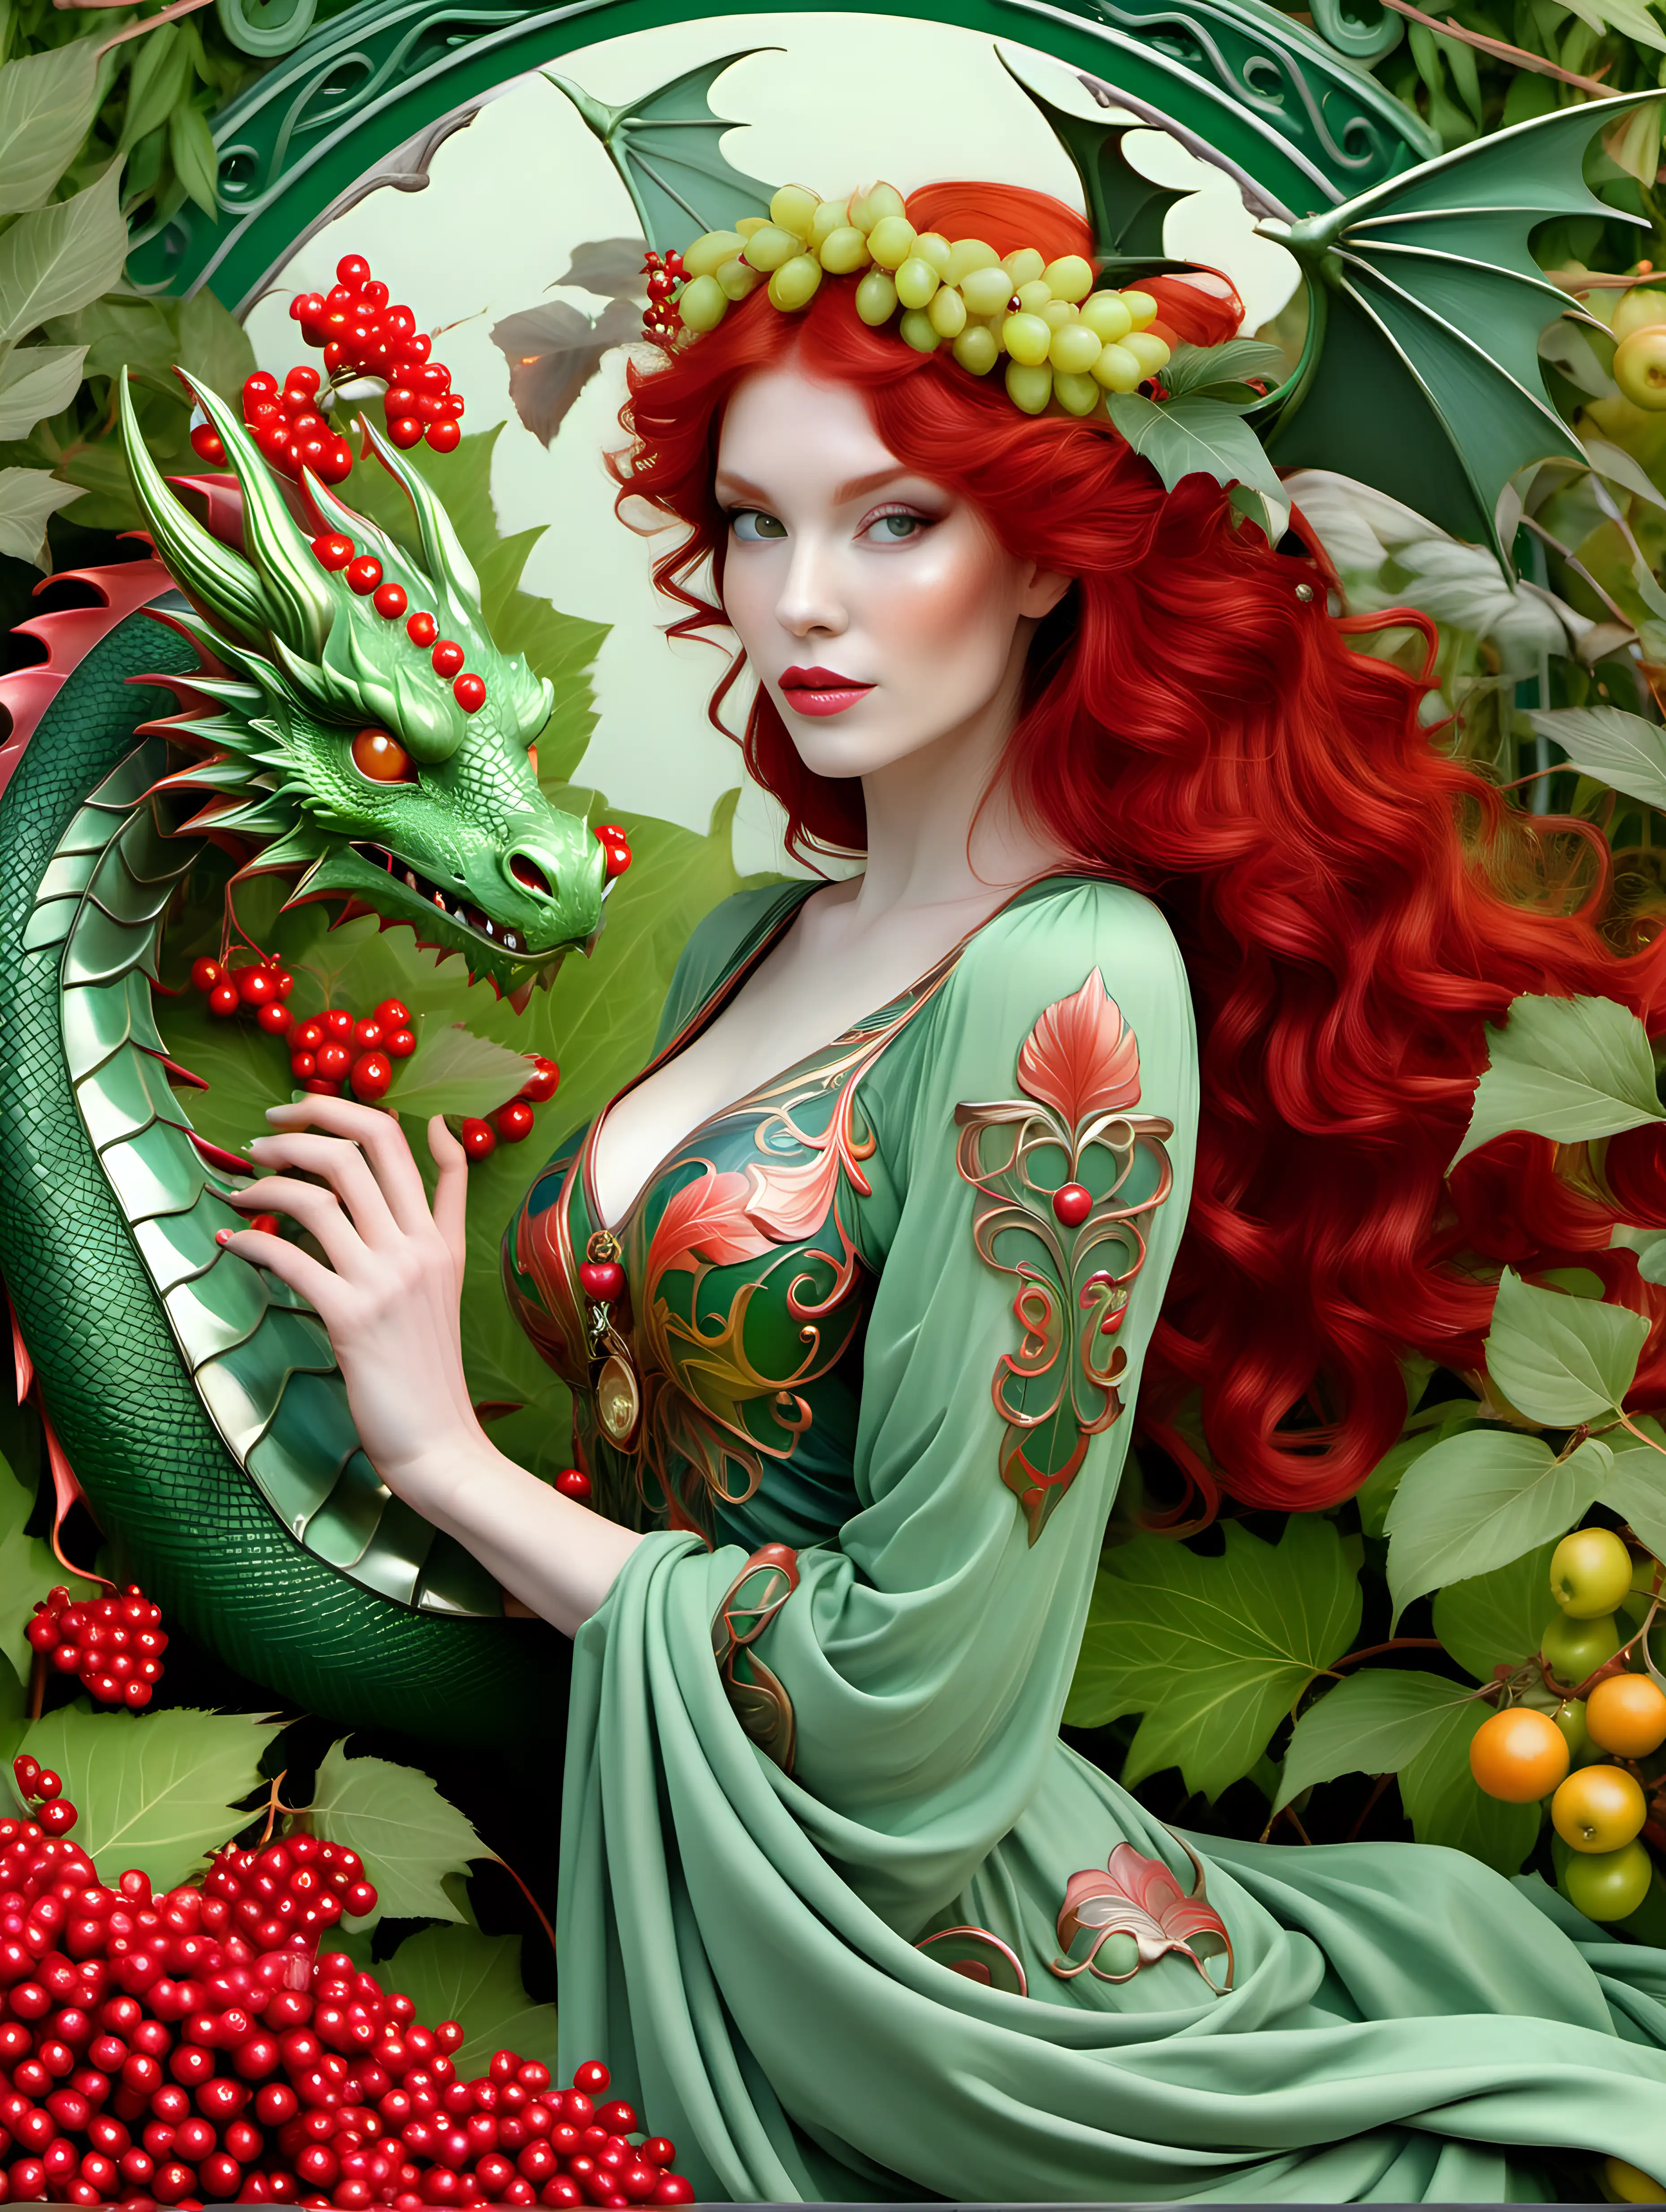 Enchanting Art Nouveau Portrait Woman and Green Dragon in Garden